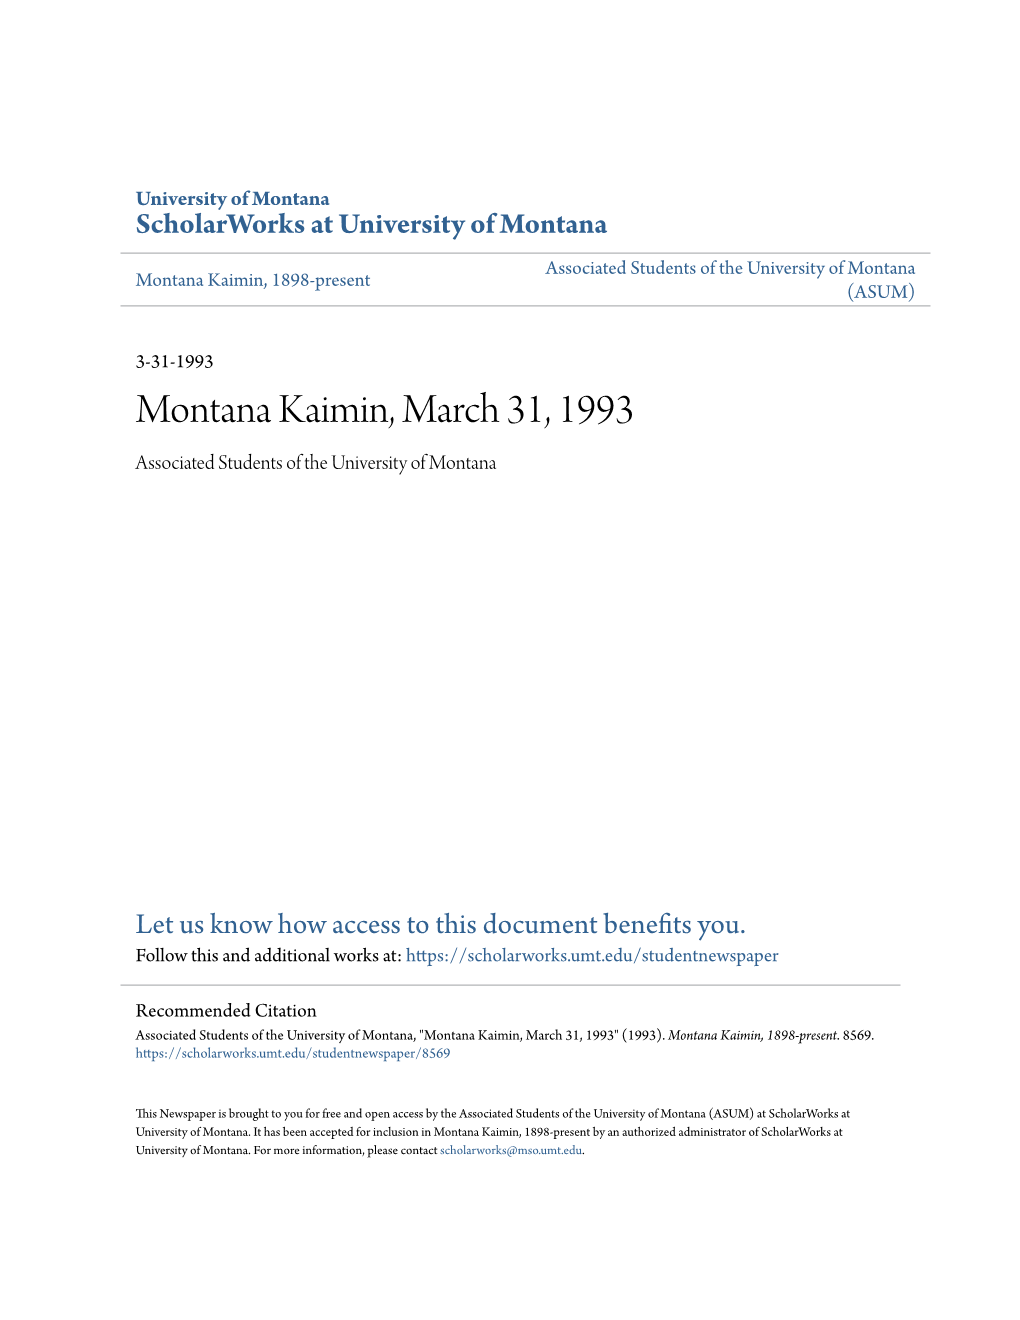 Montana Kaimin, March 31, 1993 Associated Students of the University of Montana